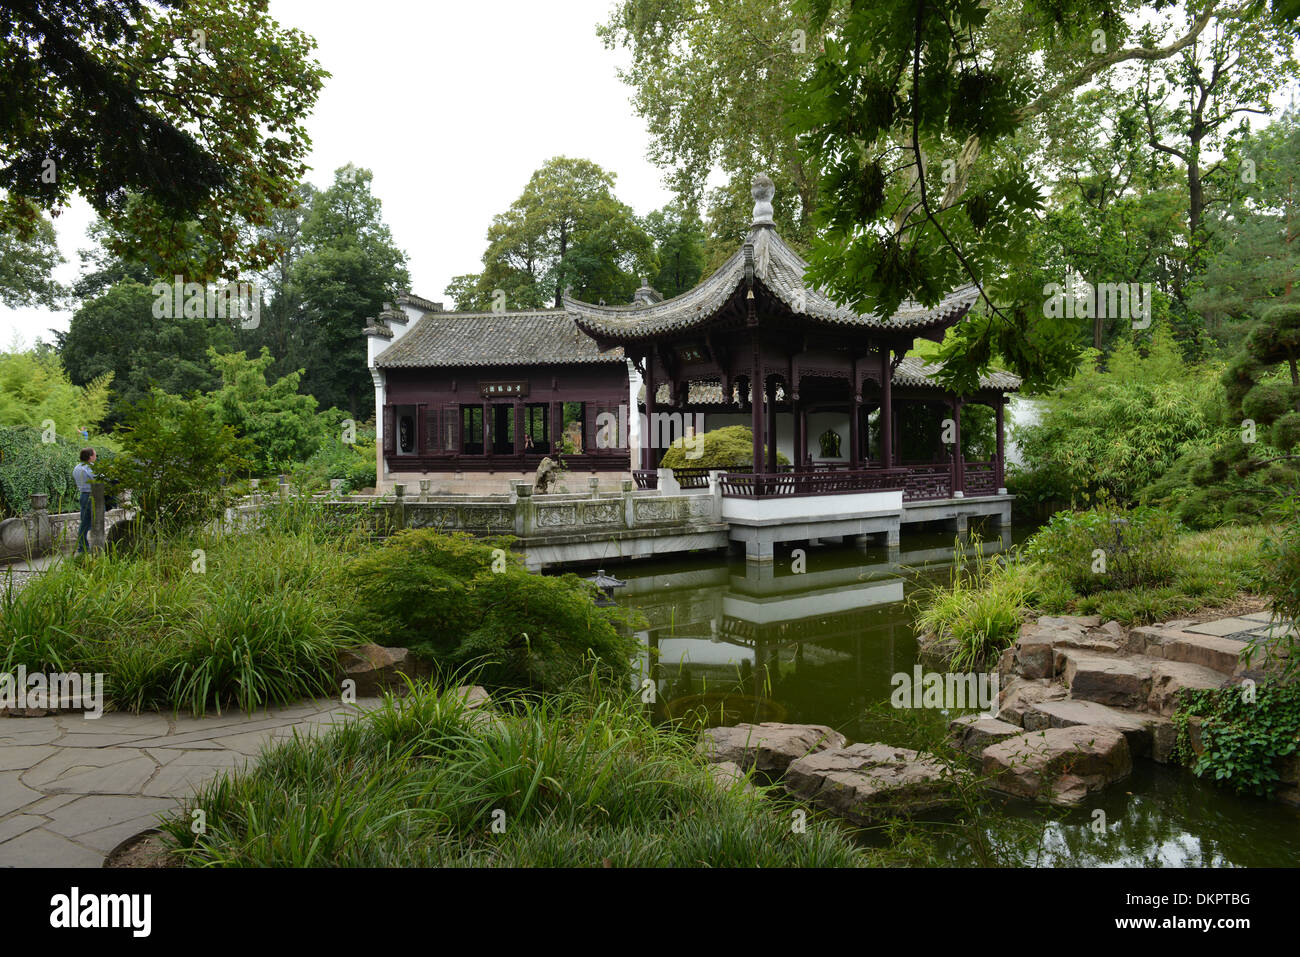 Chinesischer Garten, Bethmannpark, Frankfurt am Main, Hessen, Allemagne Banque D'Images